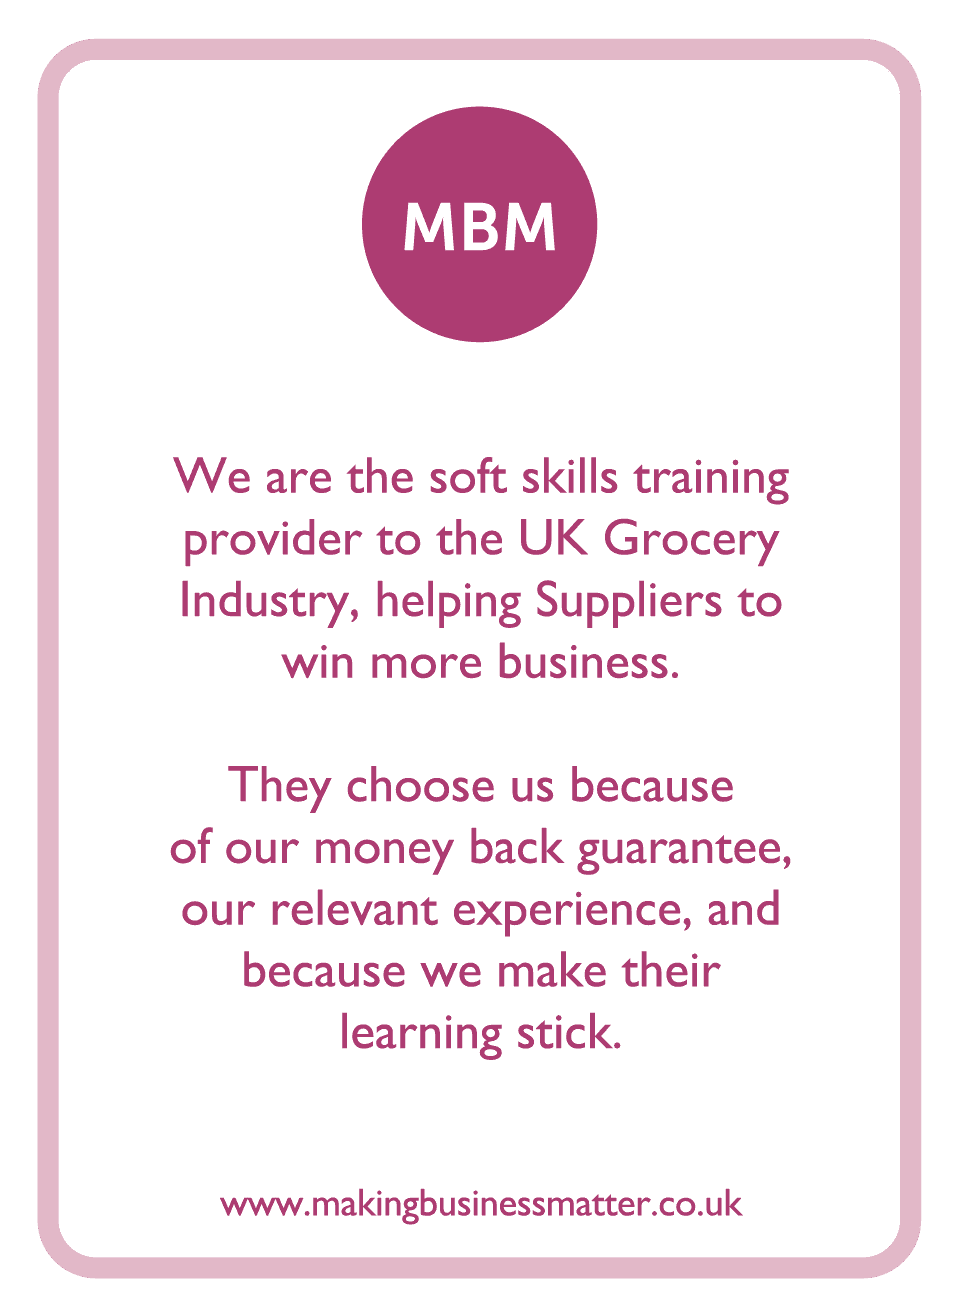 Coaching card with MBM logo